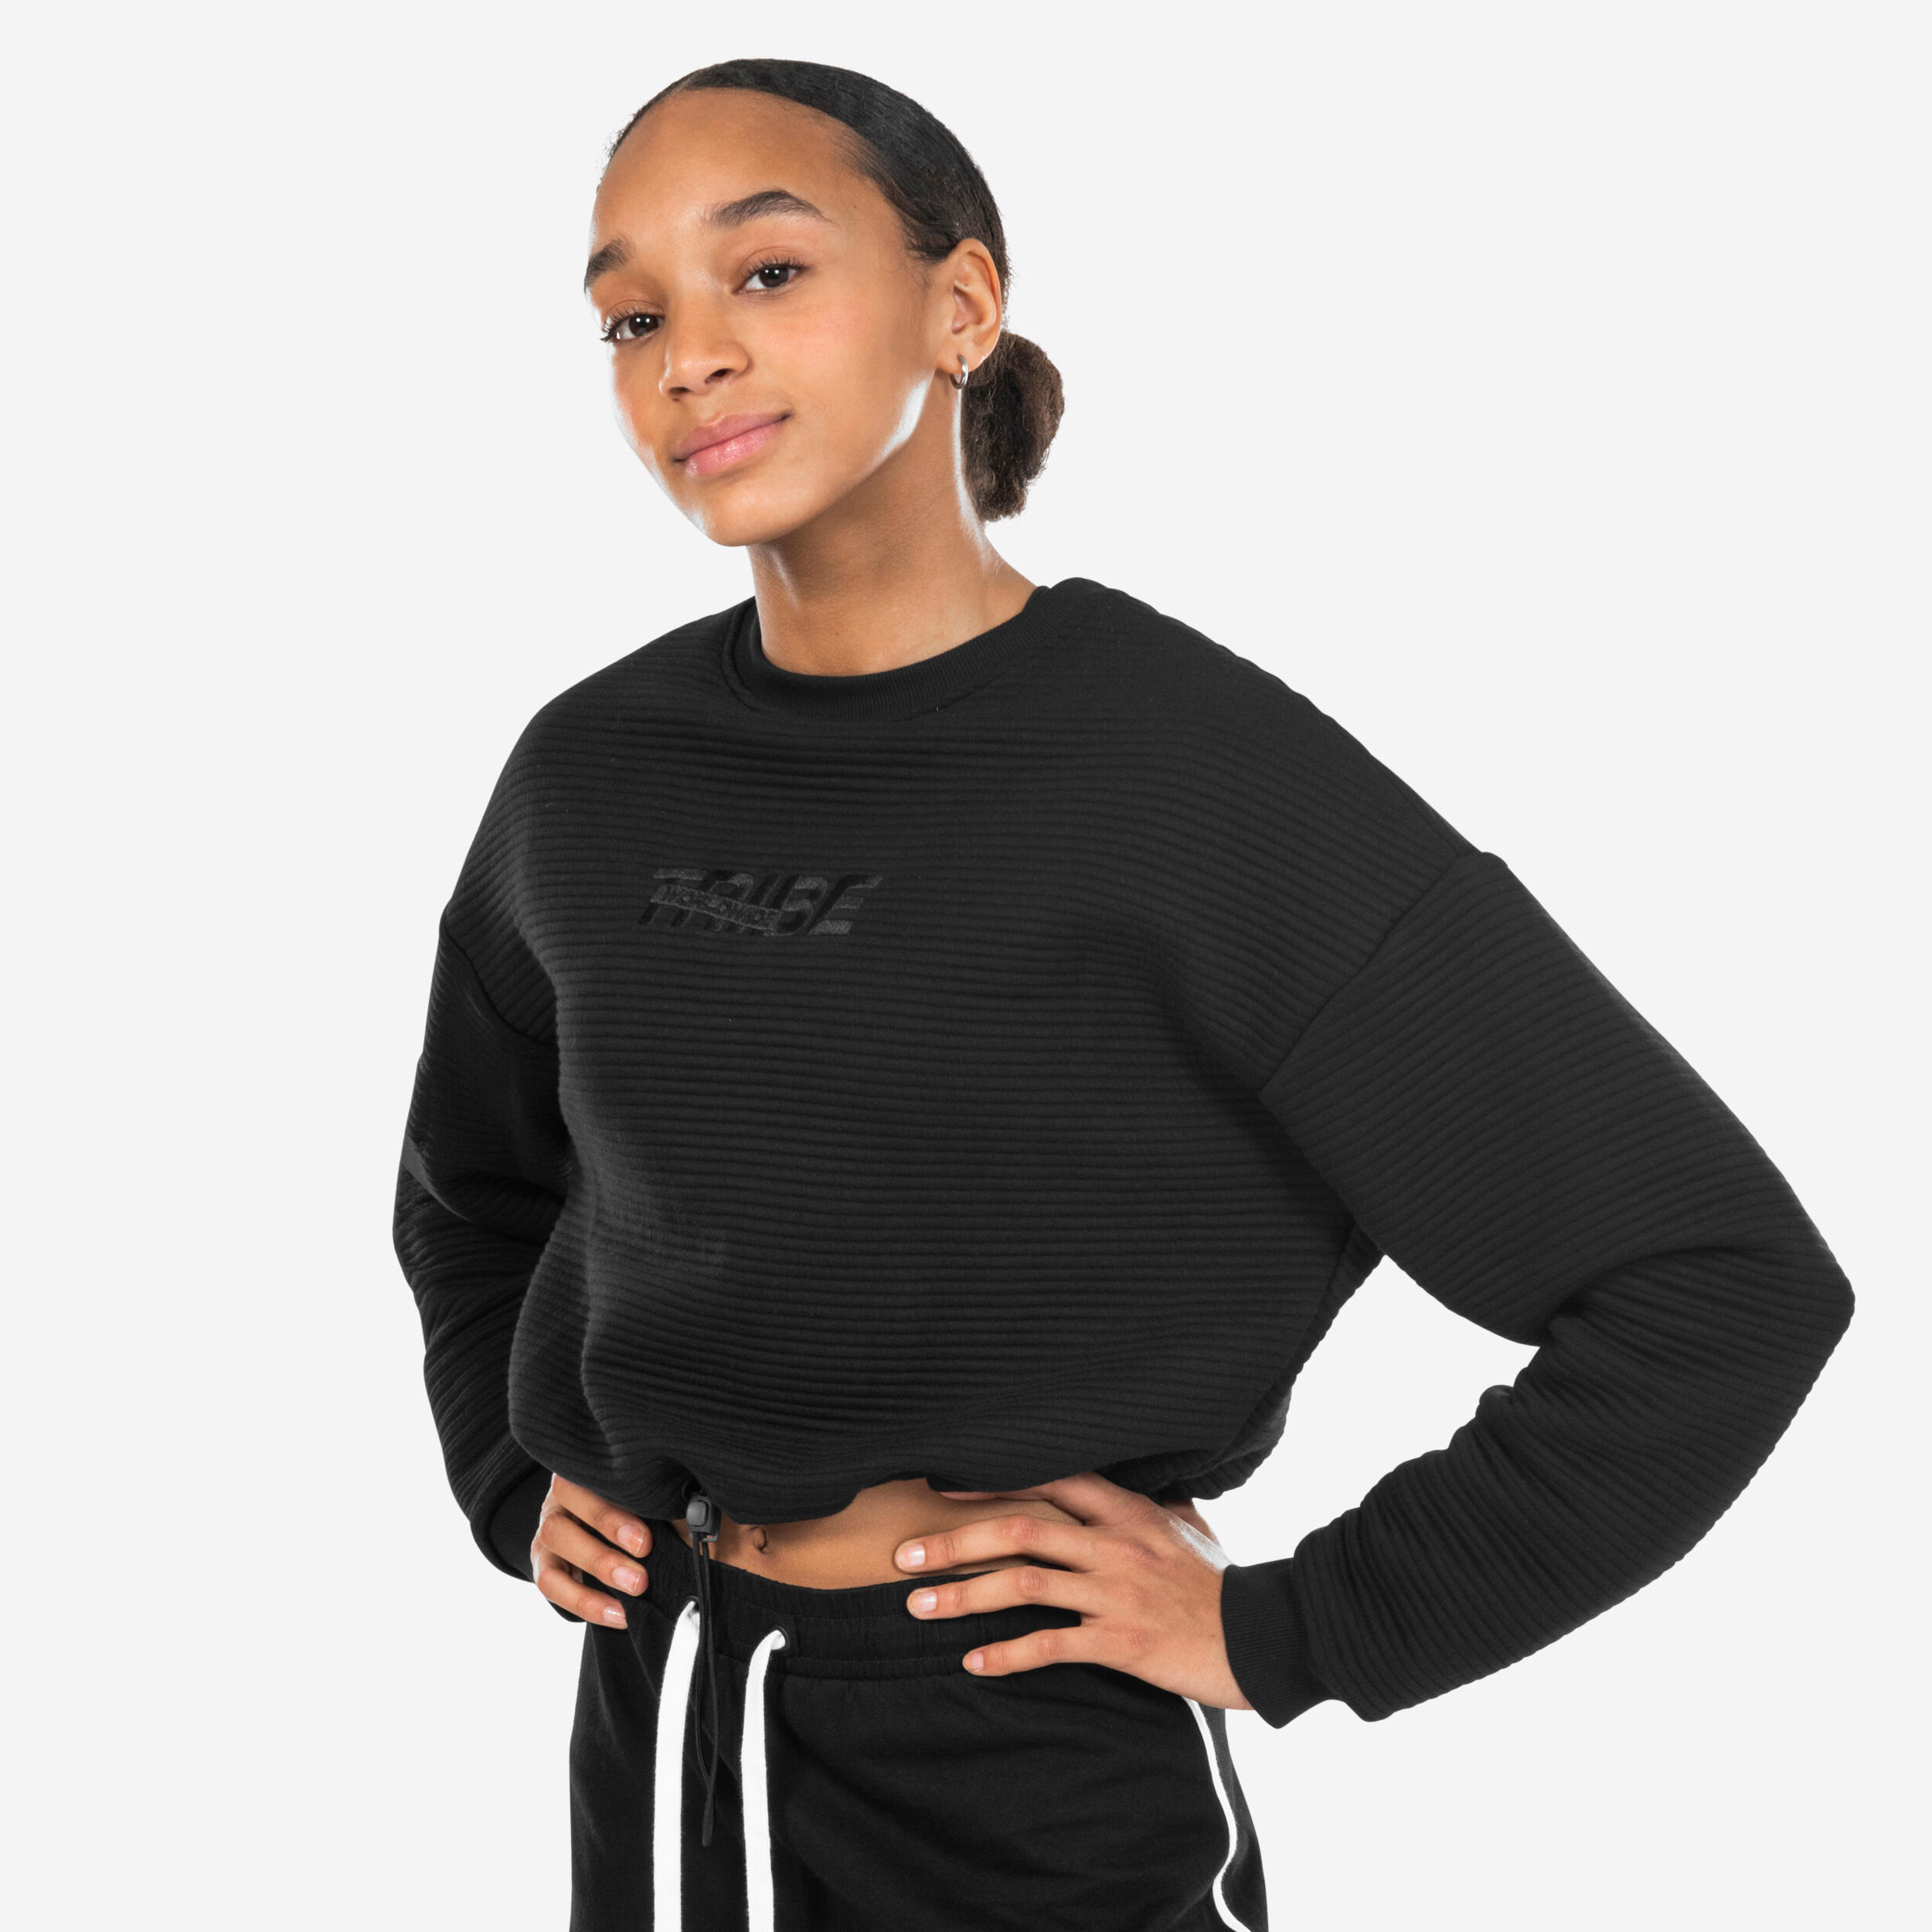 STAREVER Women's Urban Dance Cropped Sweatshirt - Black